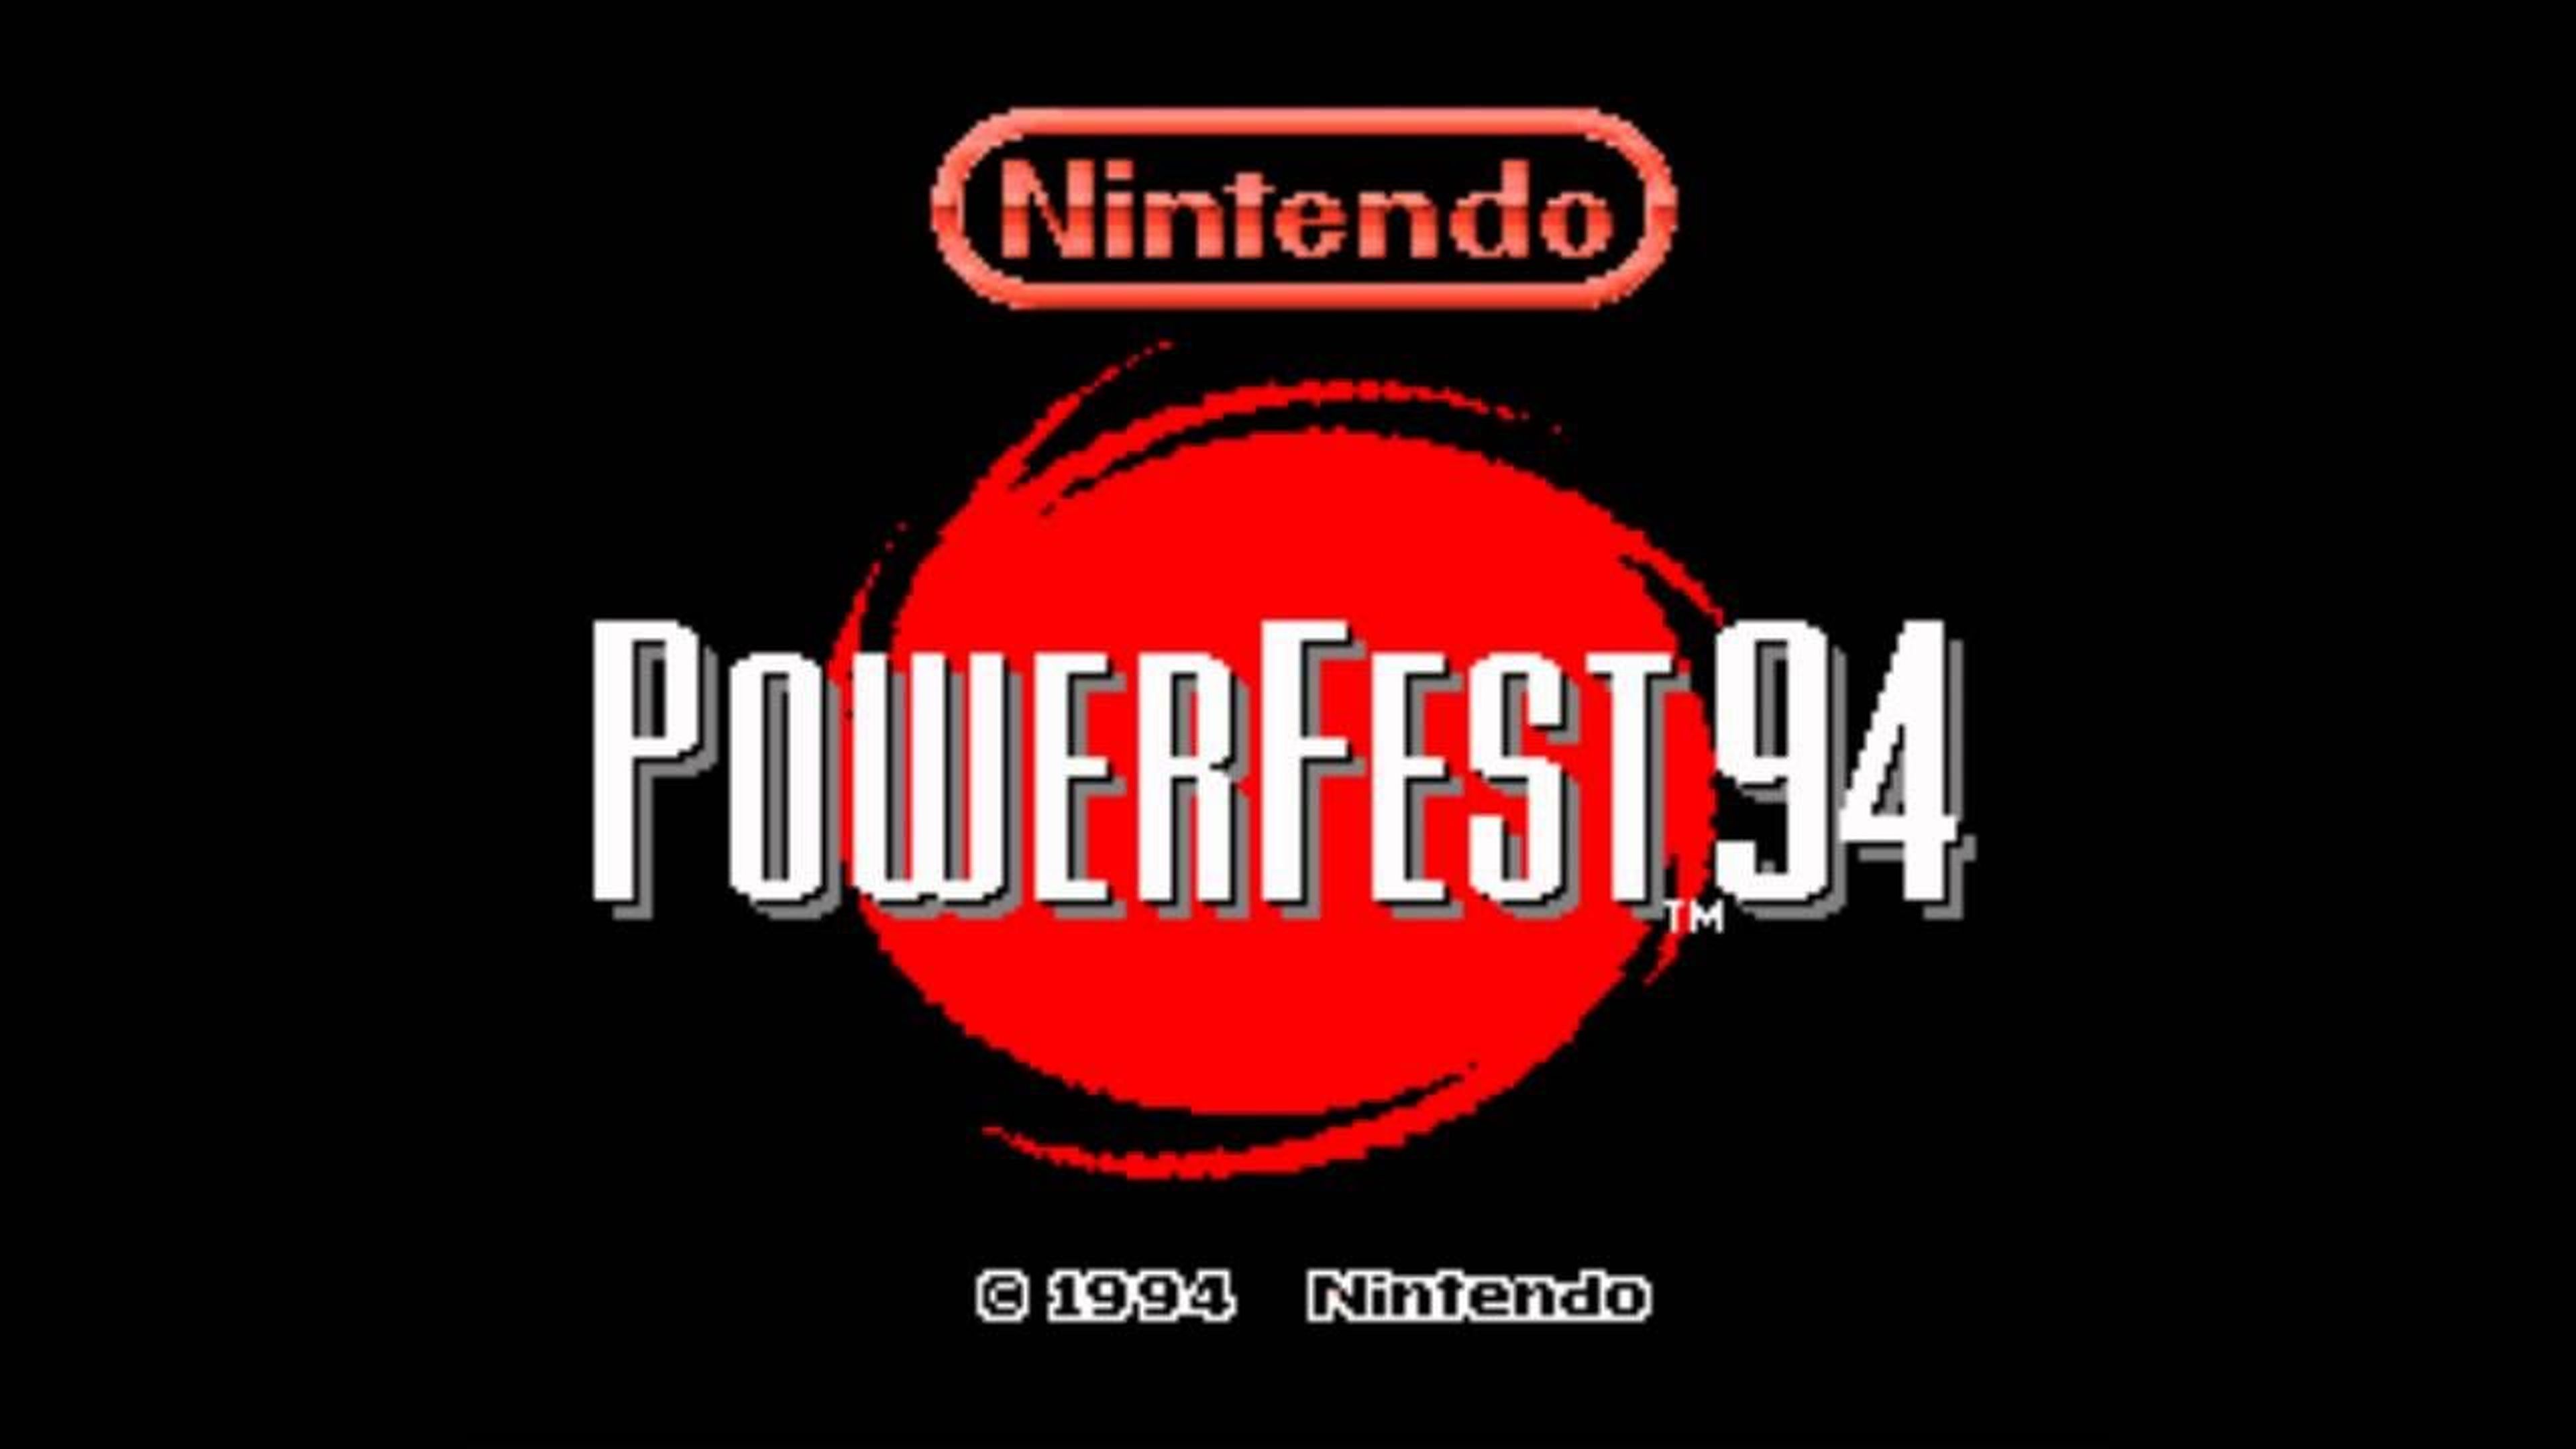 Nintendo Powerfest